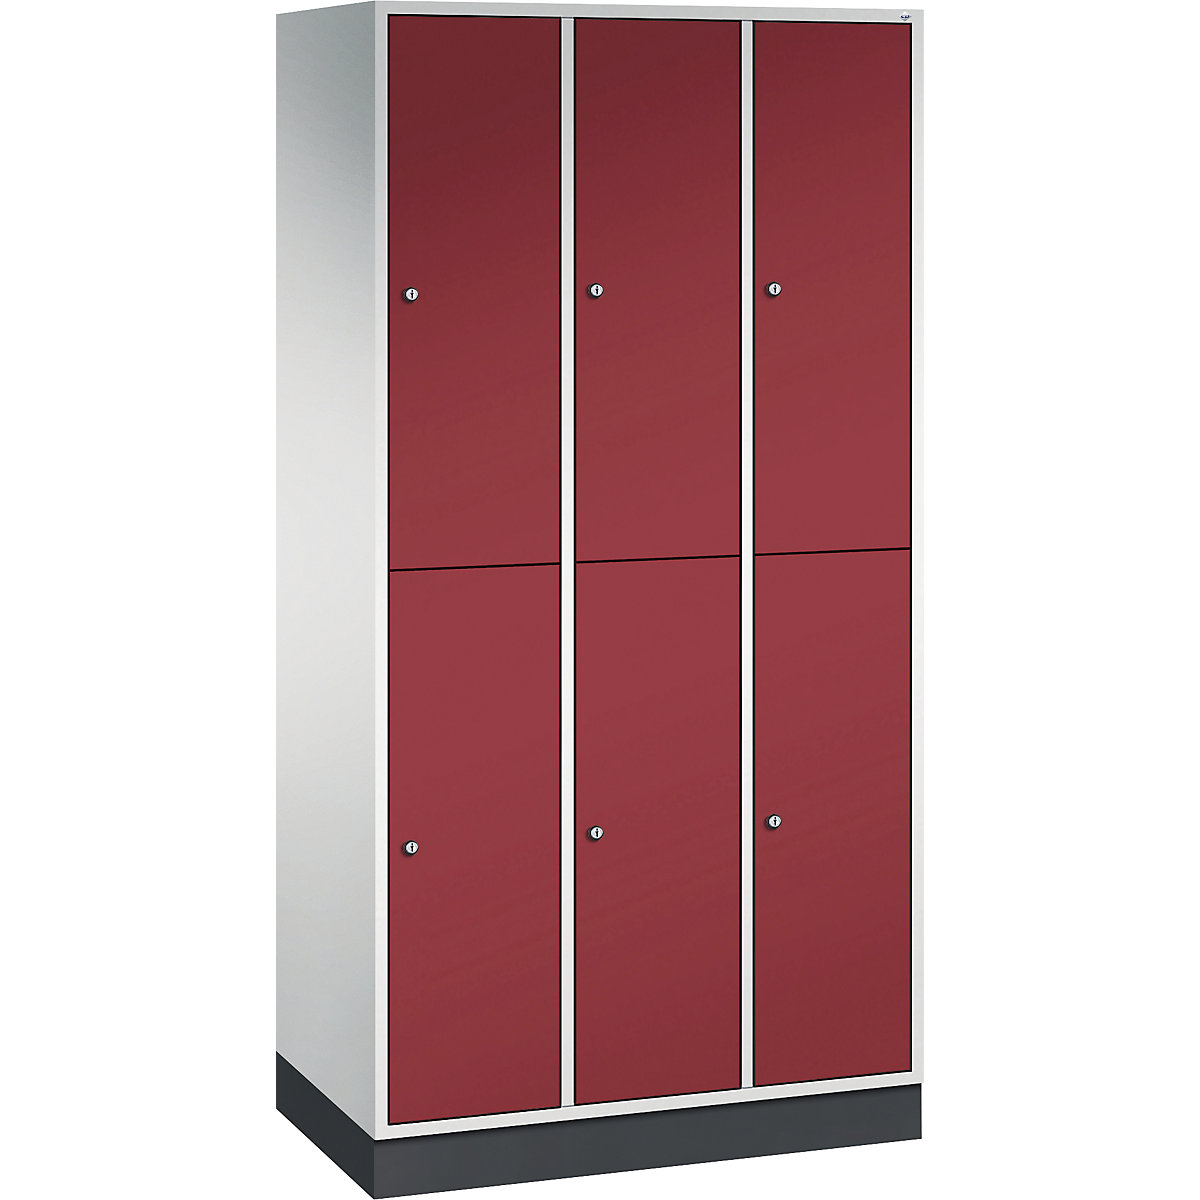 INTRO double tier steel cloakroom locker – C+P, WxD 920 x 500 mm, 6 compartments, light grey body, ruby red doors